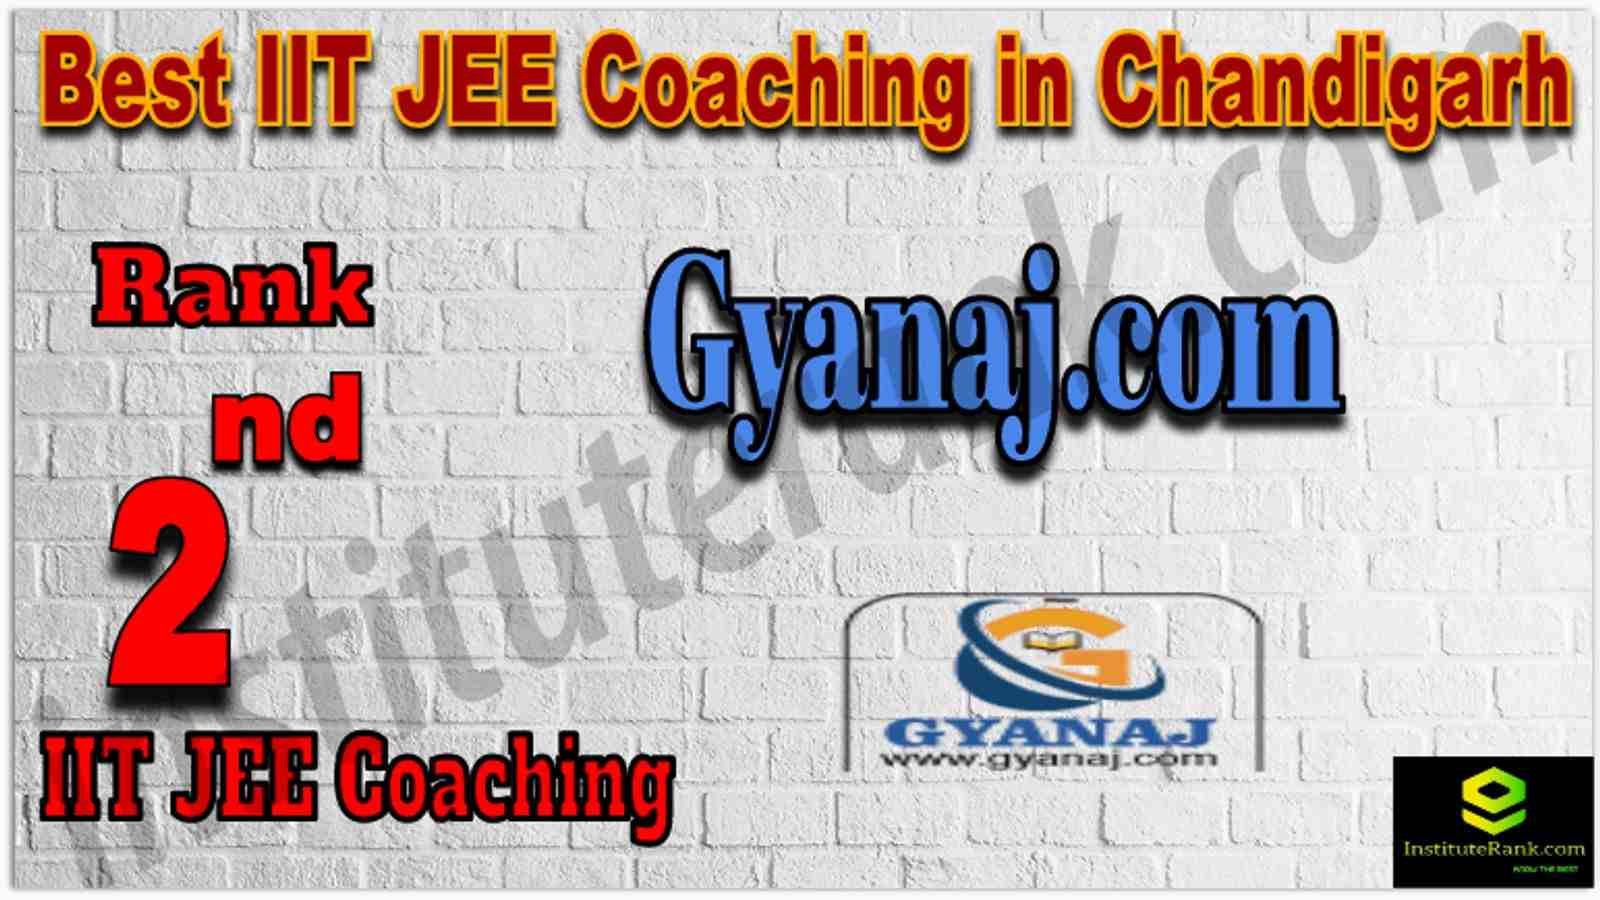 Rank 2nd Best IIT JEE Coaching in Chandigarh